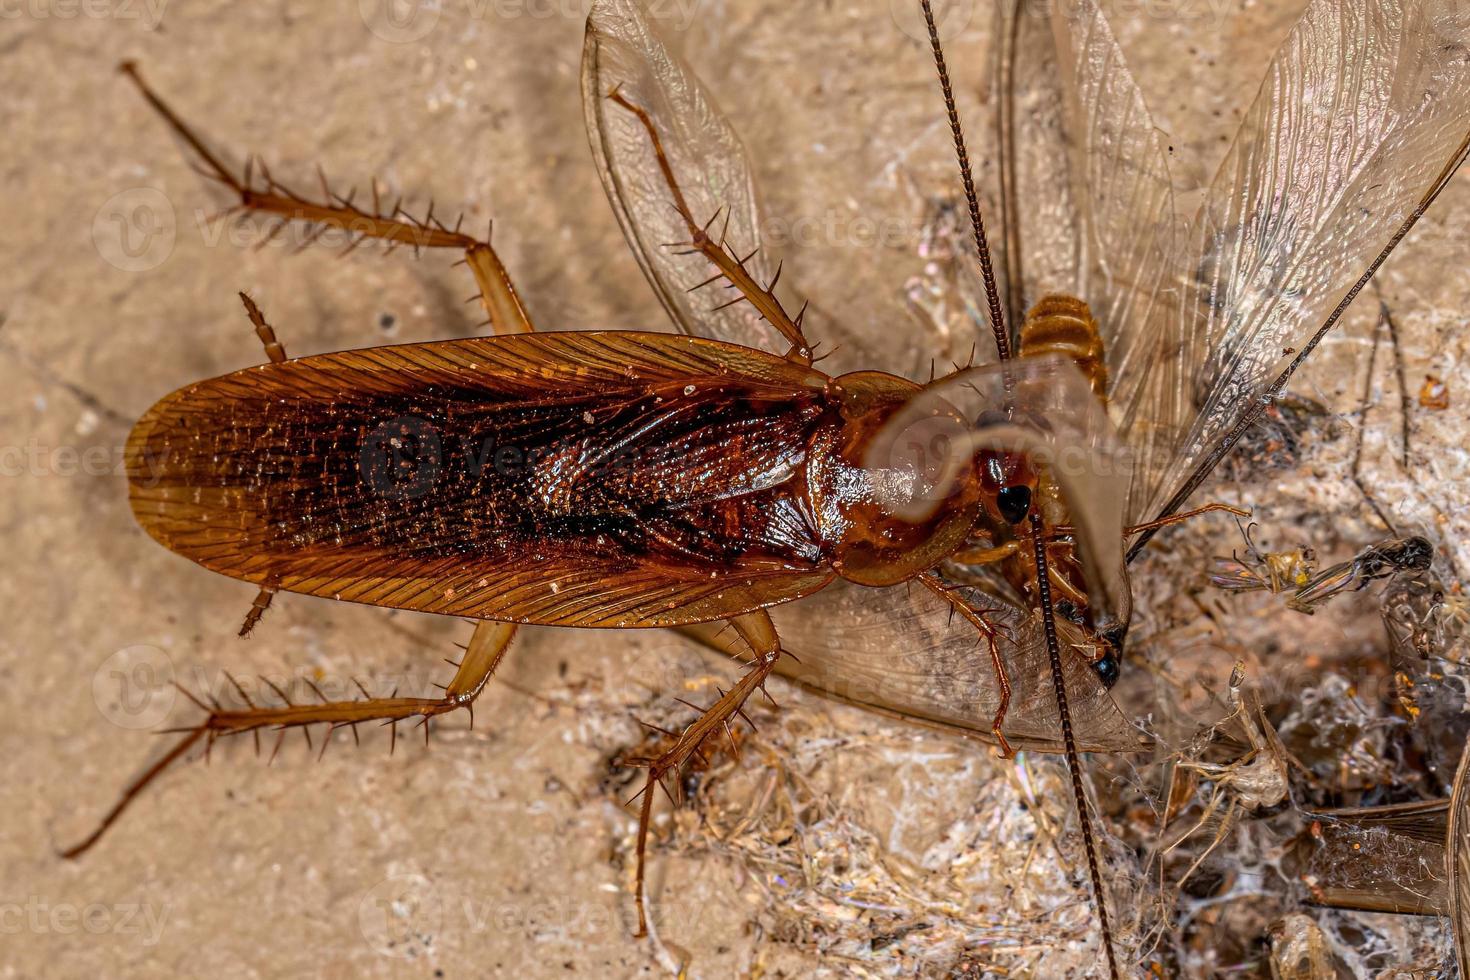 cucaracha de madera adulta comiendo una termita alada foto